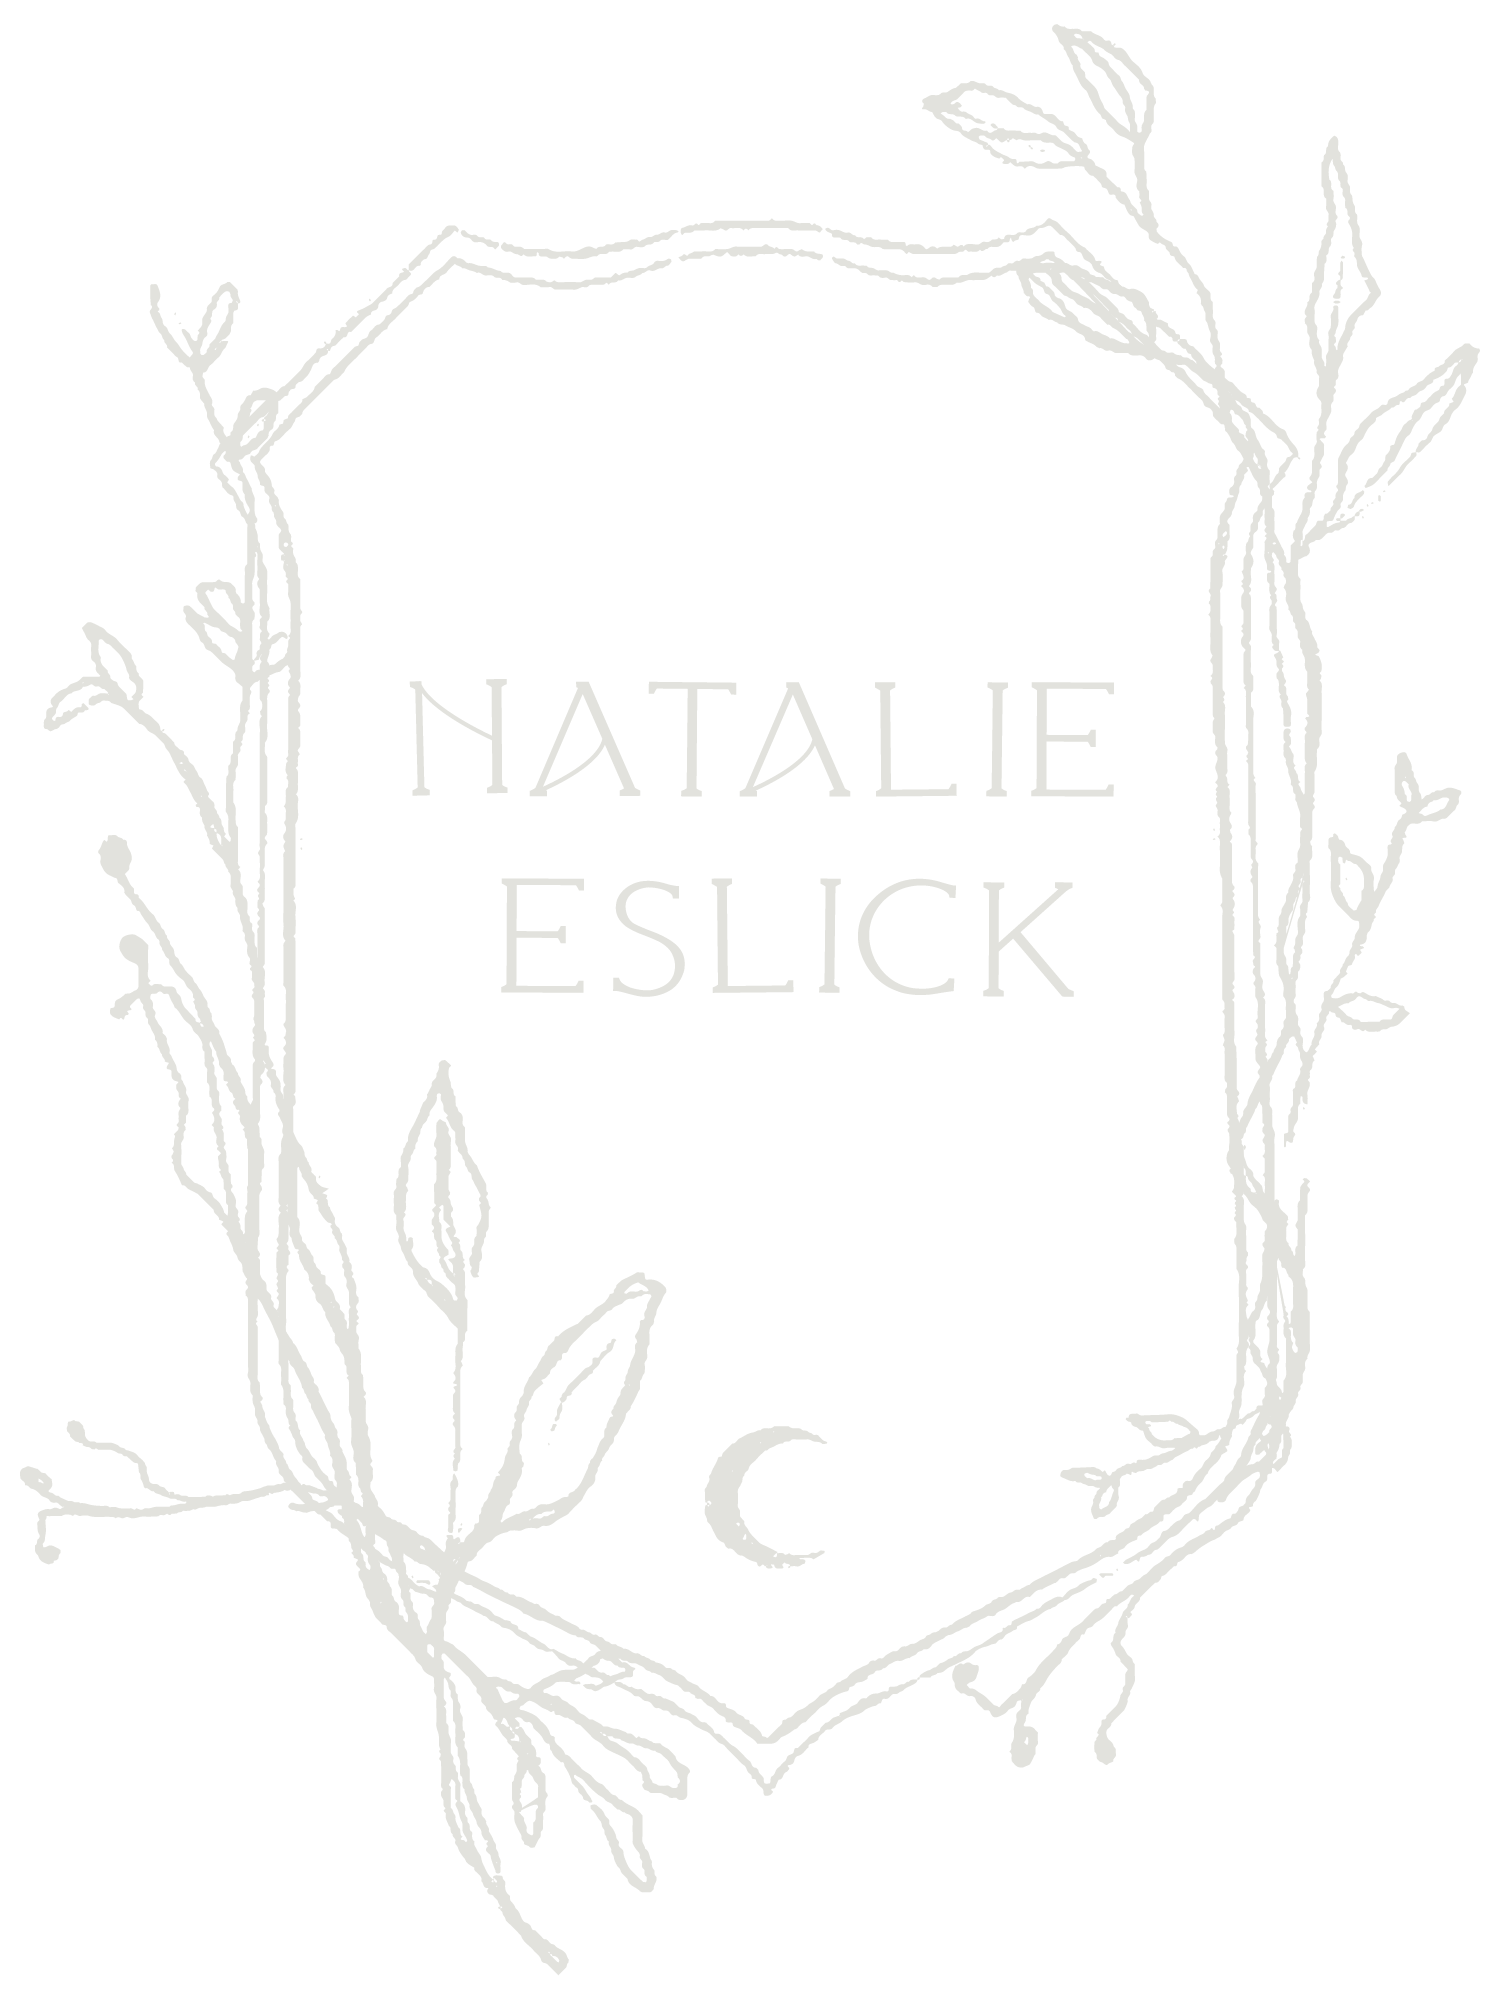 Natalie Eslick